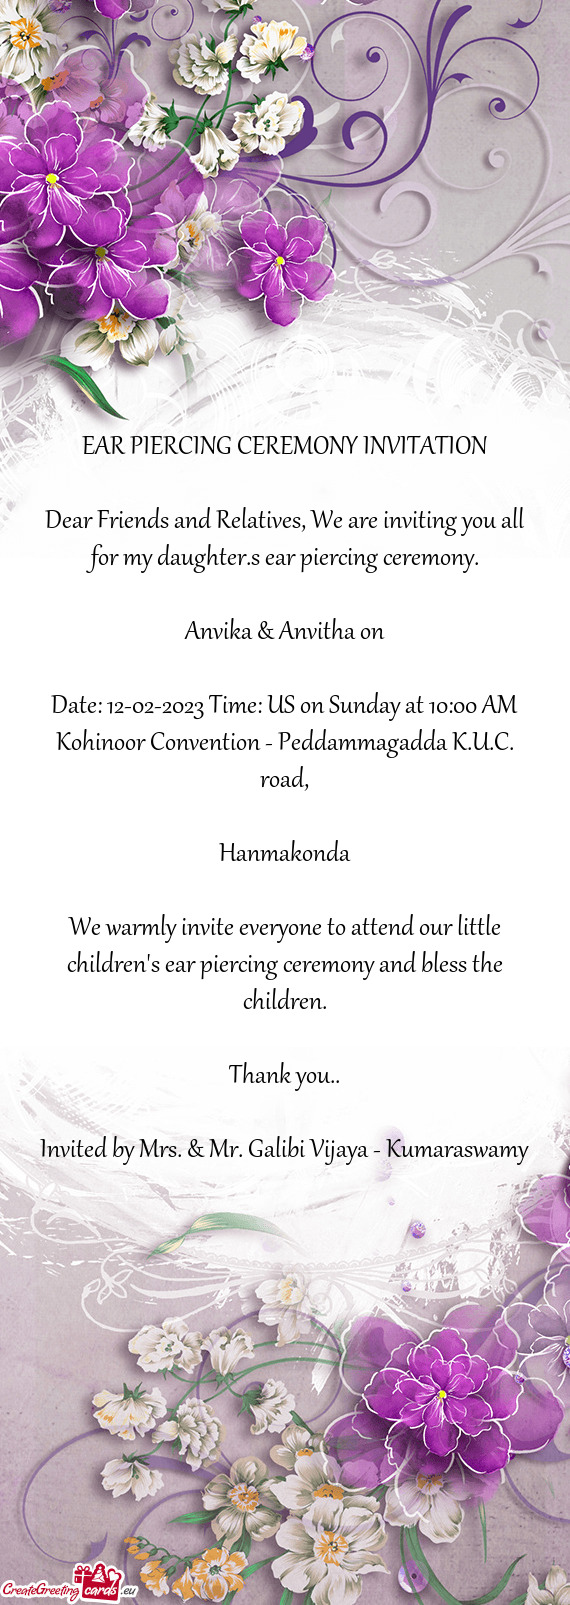 Date: 12-02-2023 Time: US on Sunday at 10:00 AM Kohinoor Convention - Peddammagadda K.U.C. road